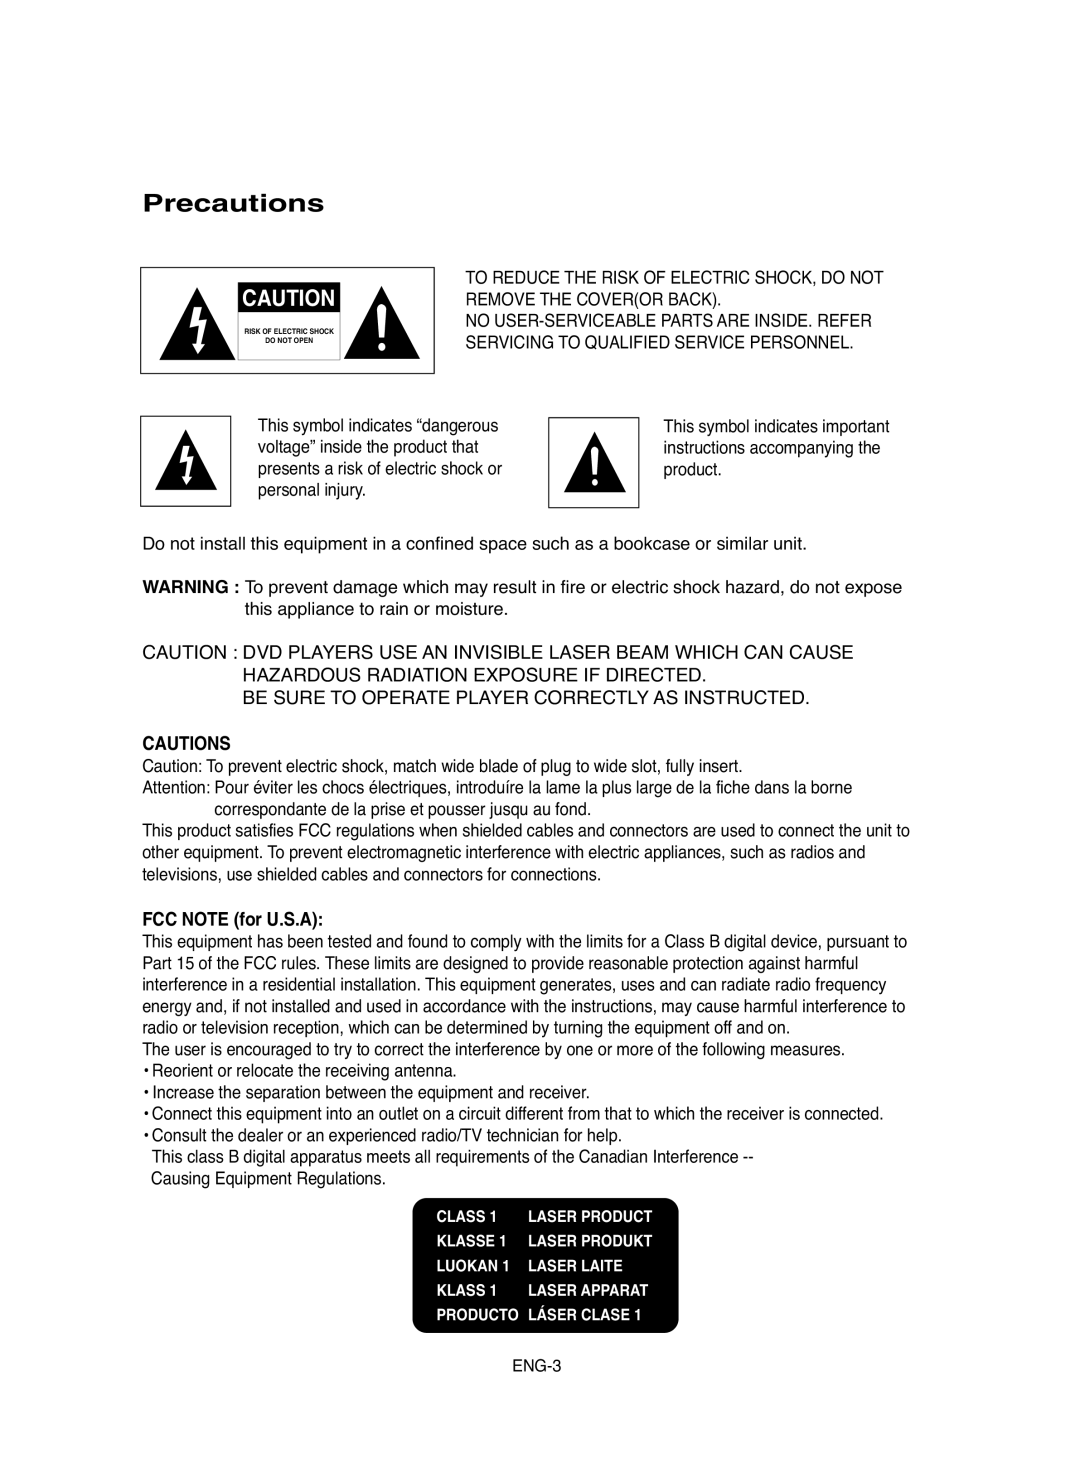 Samsung DVD-HD755 manual Precautions, Cautions, FCC NOTE for U.S.A 